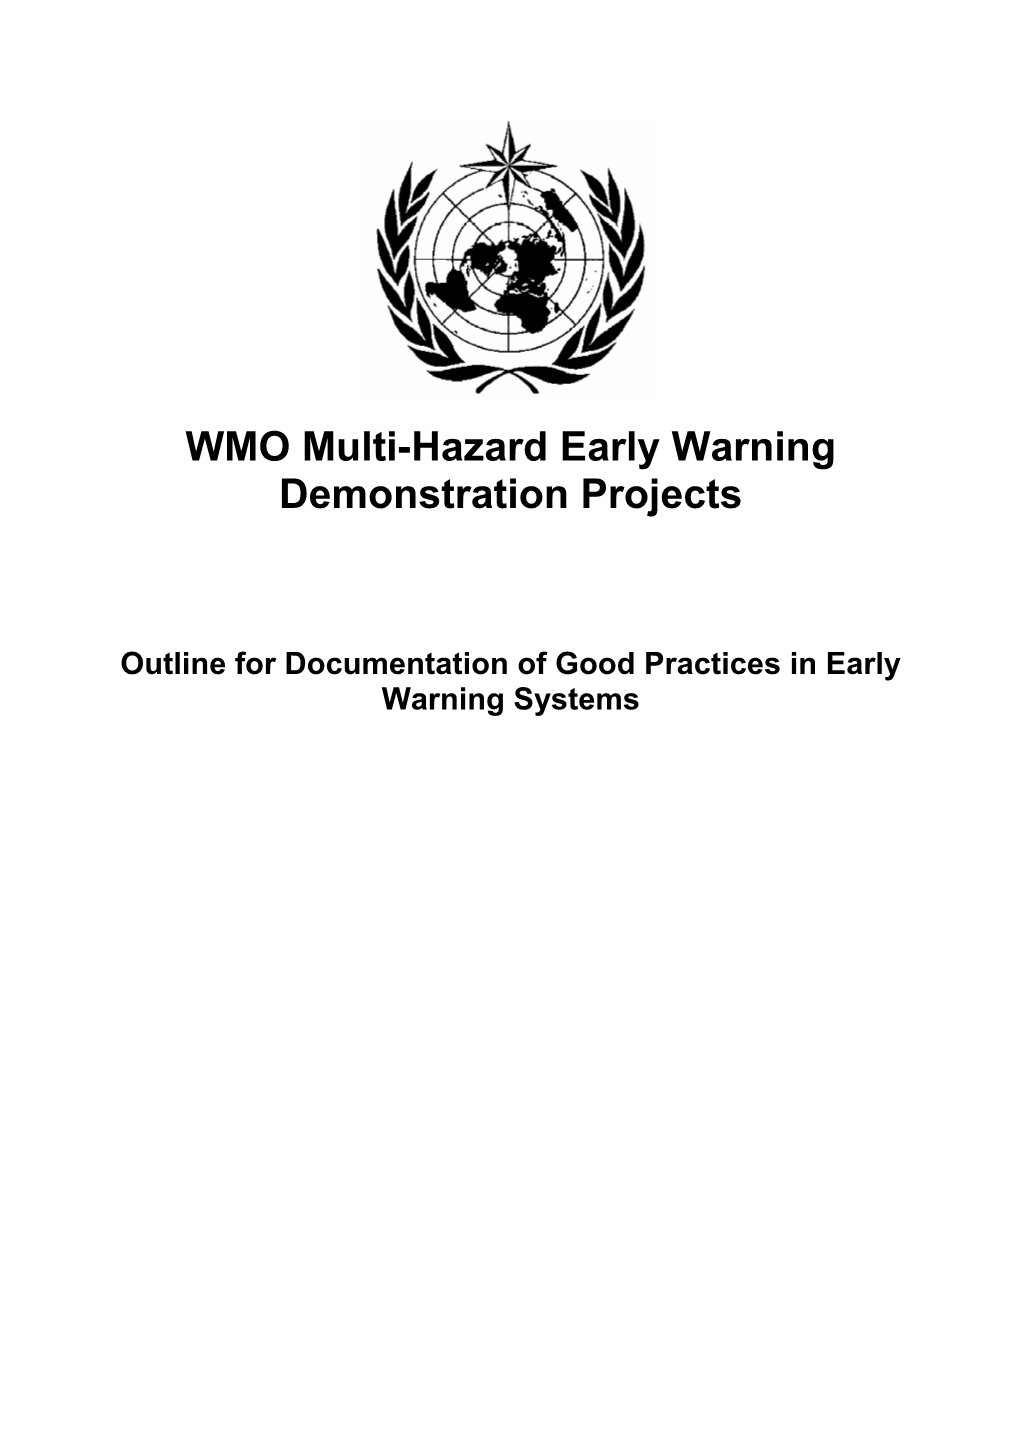 WMO Multi-Hazard Early Warning Demonstration Projects